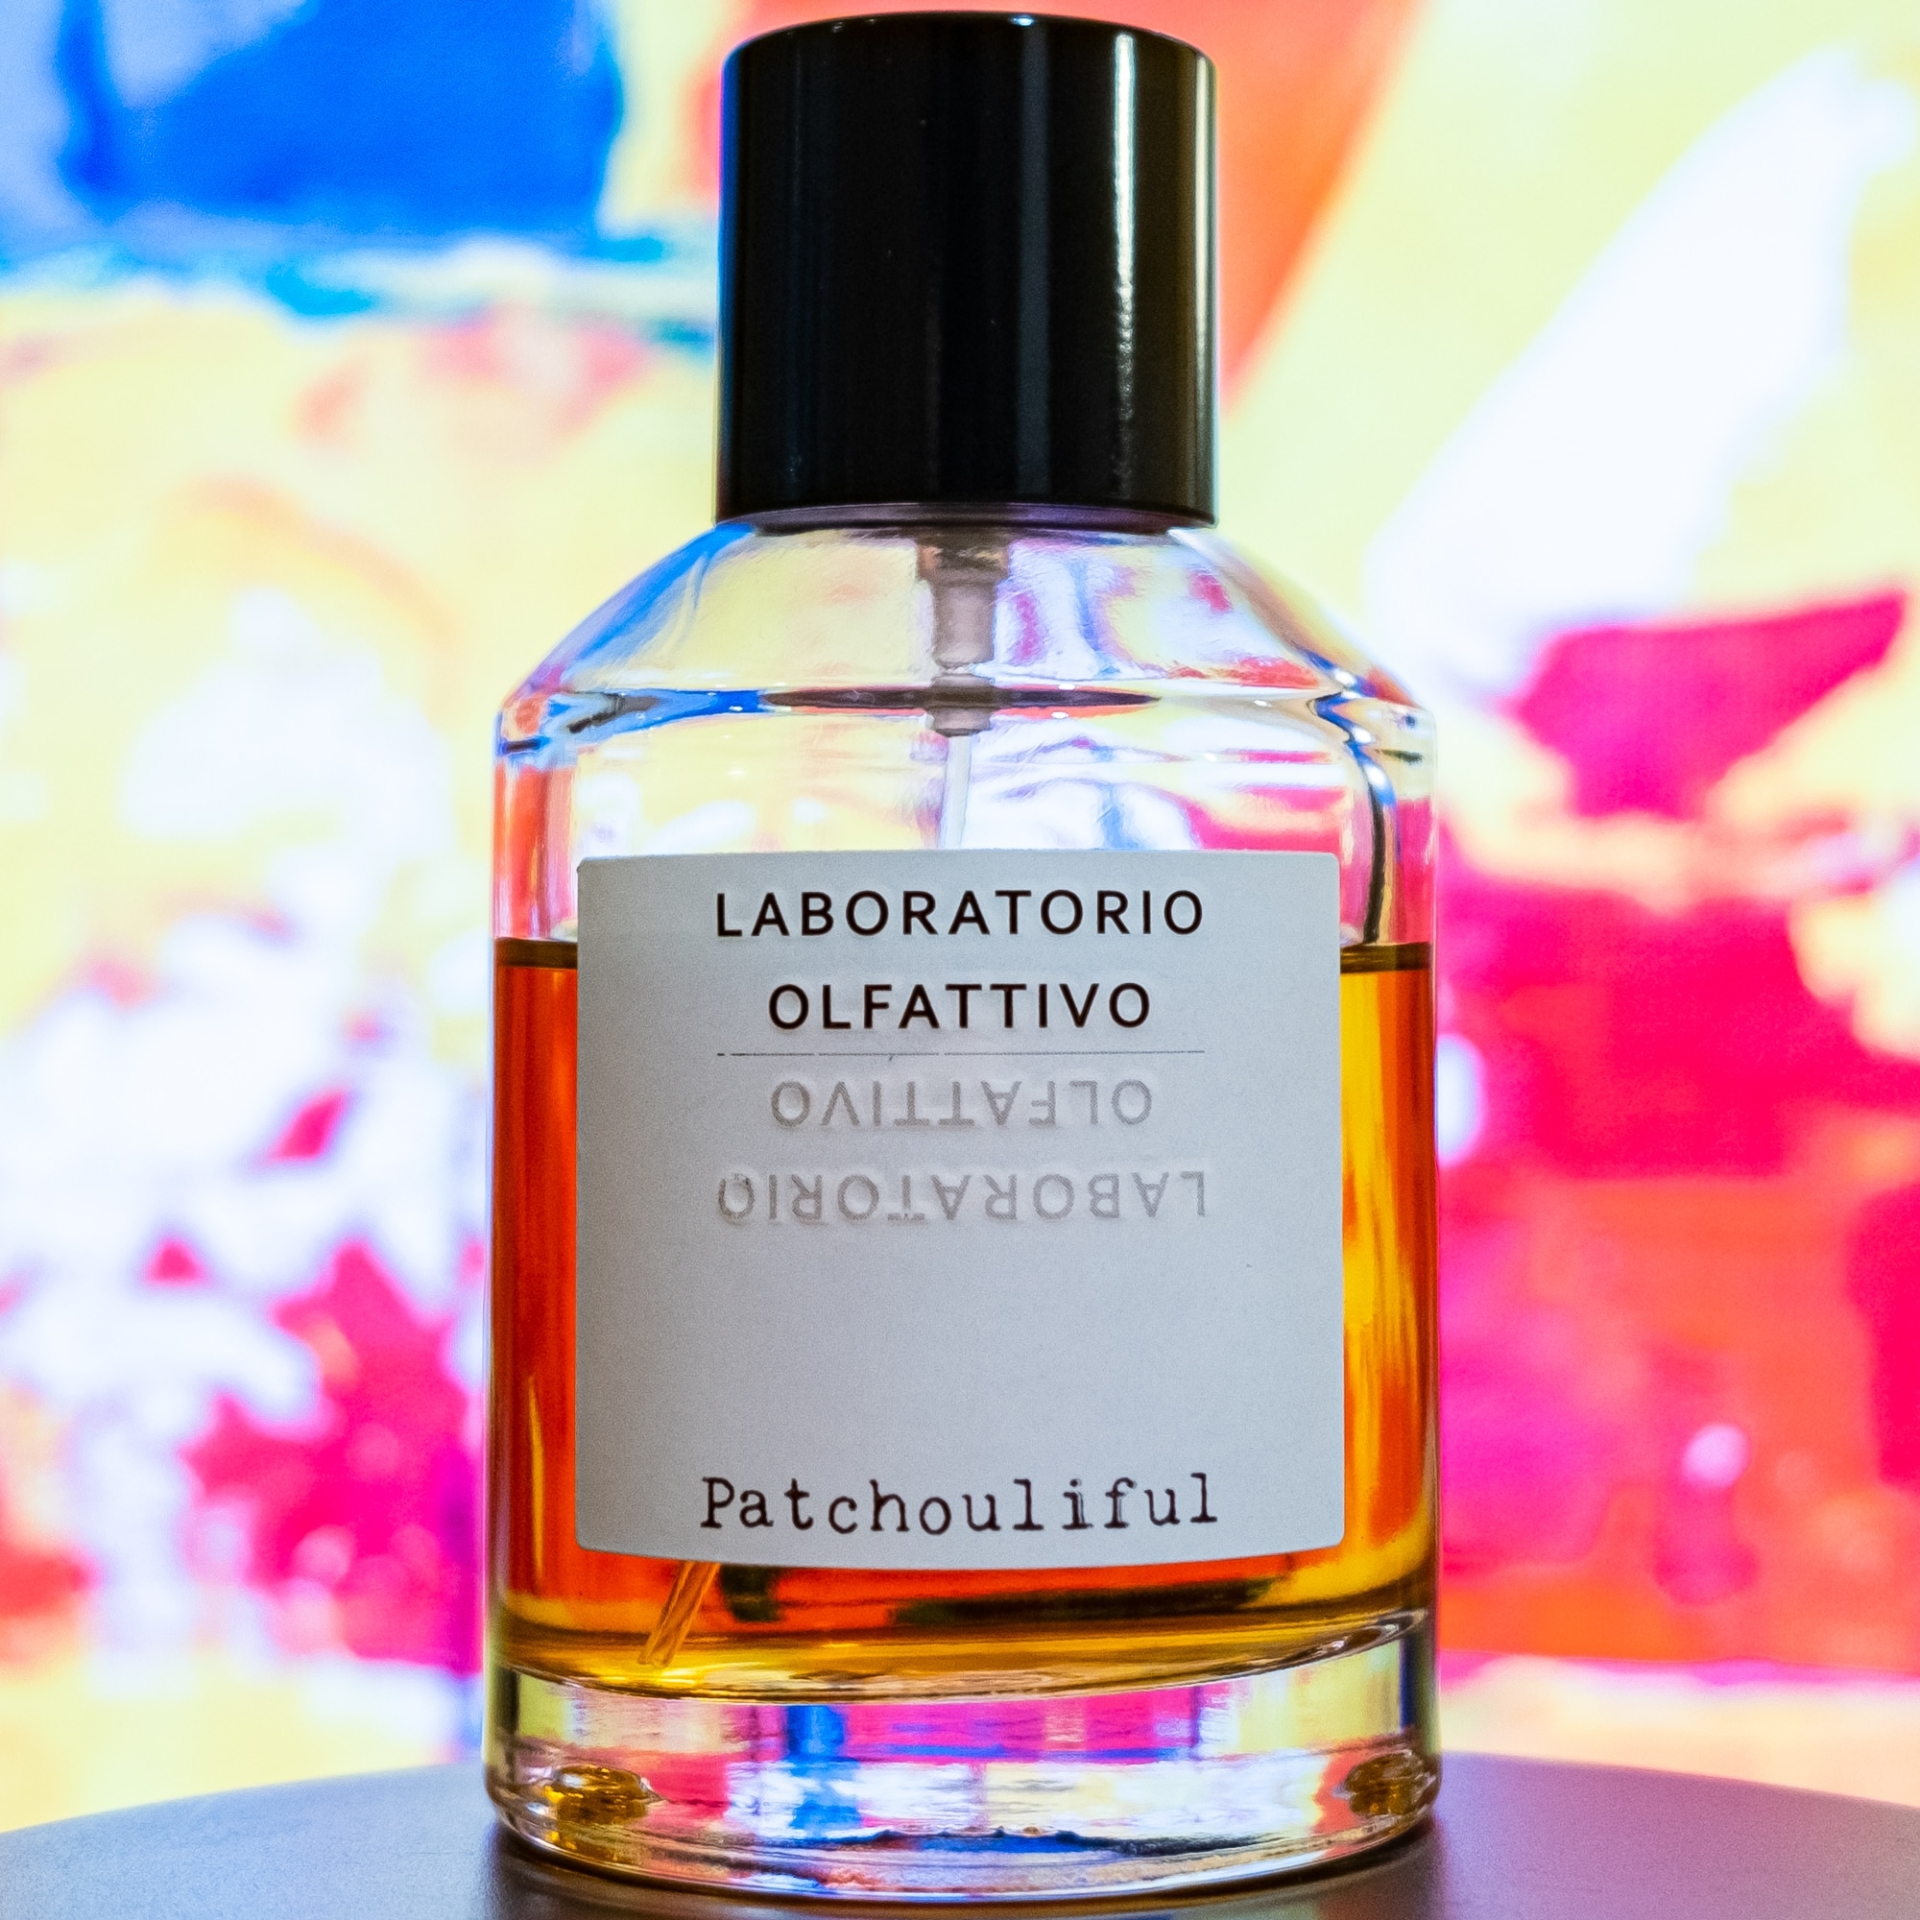 laboratorio-olfattivo-patchouliful